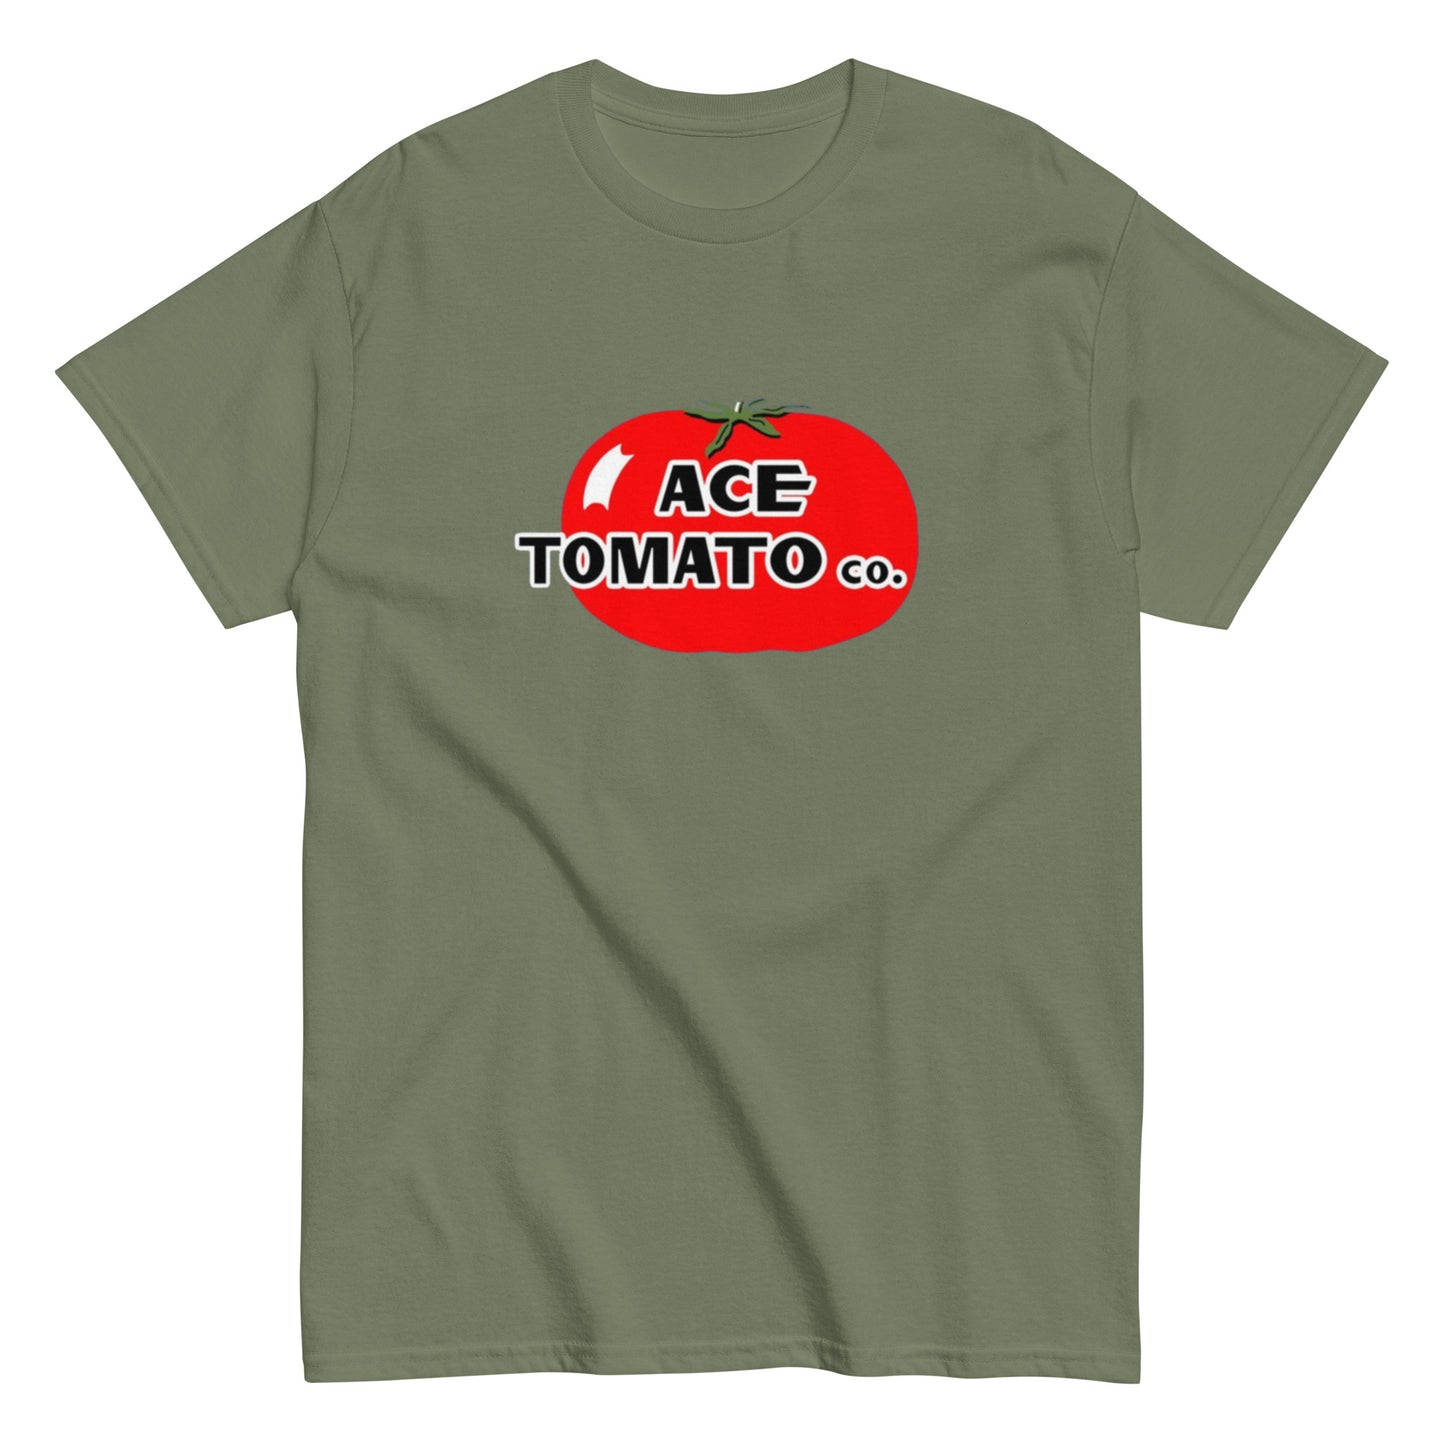 Spies Like Us "ACE Tomato Company" CIA T-Shirt